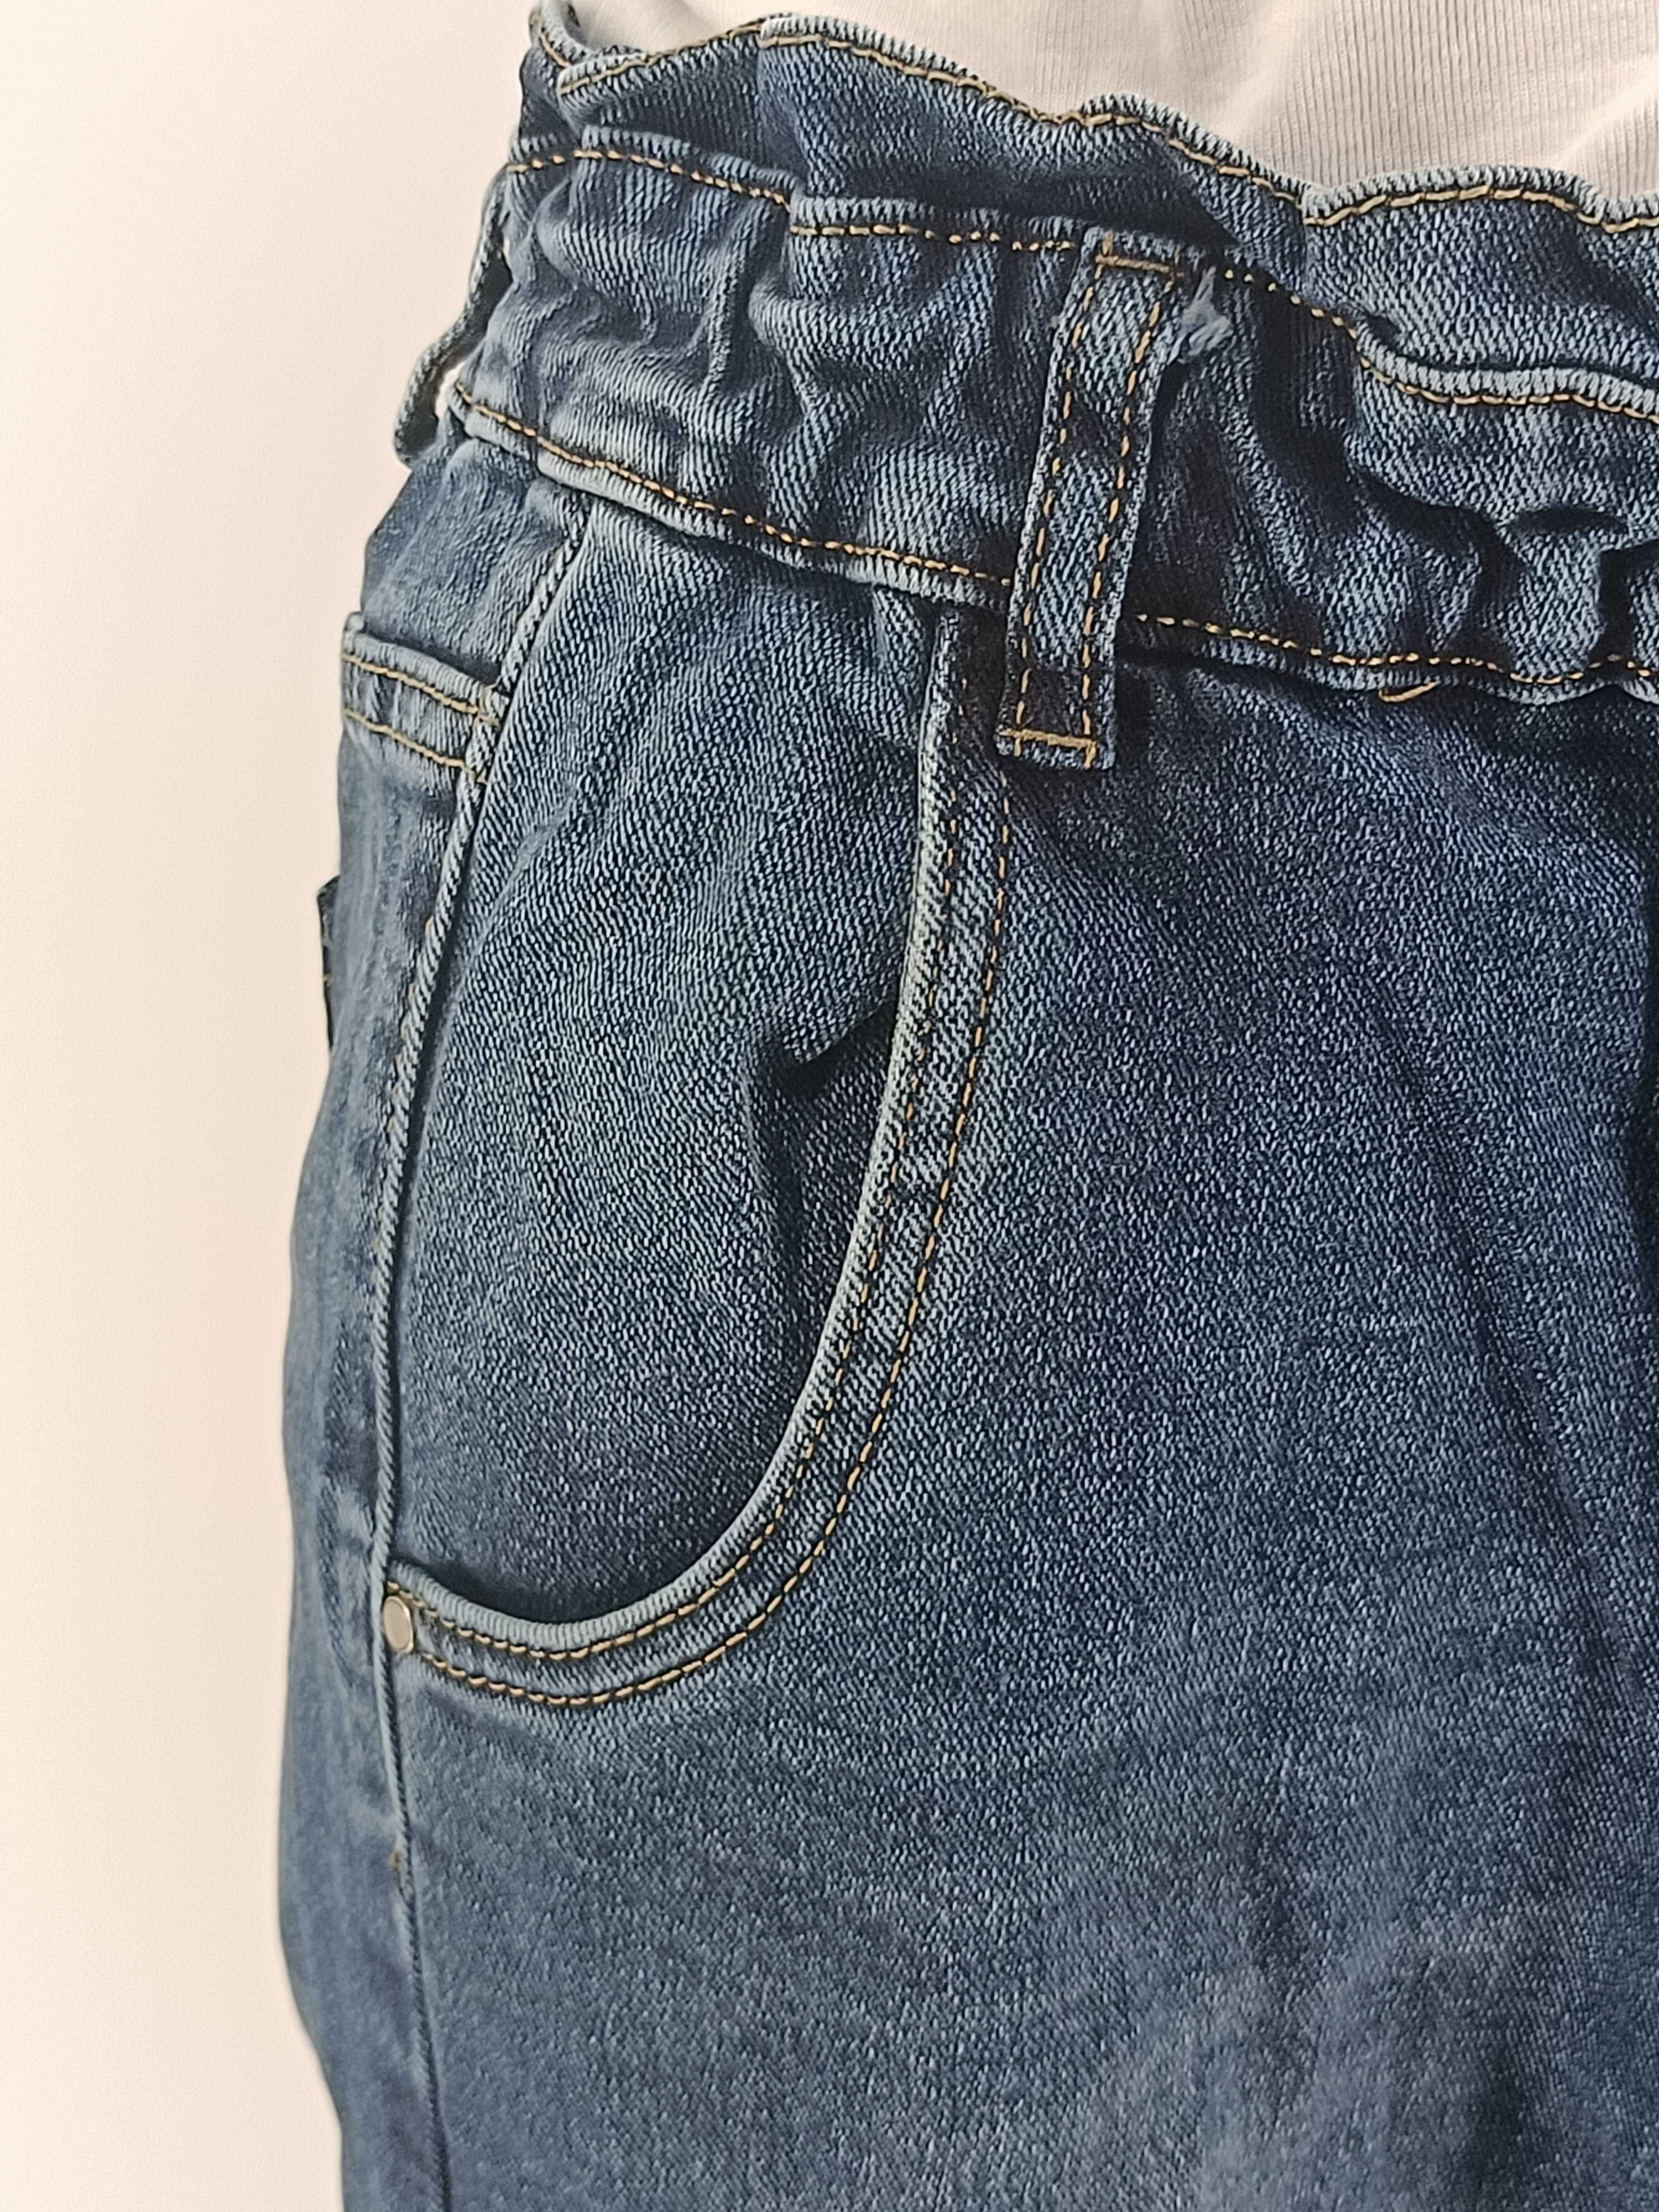 Spodnie Slouchy Jeans Blue damskie jeansy L 40